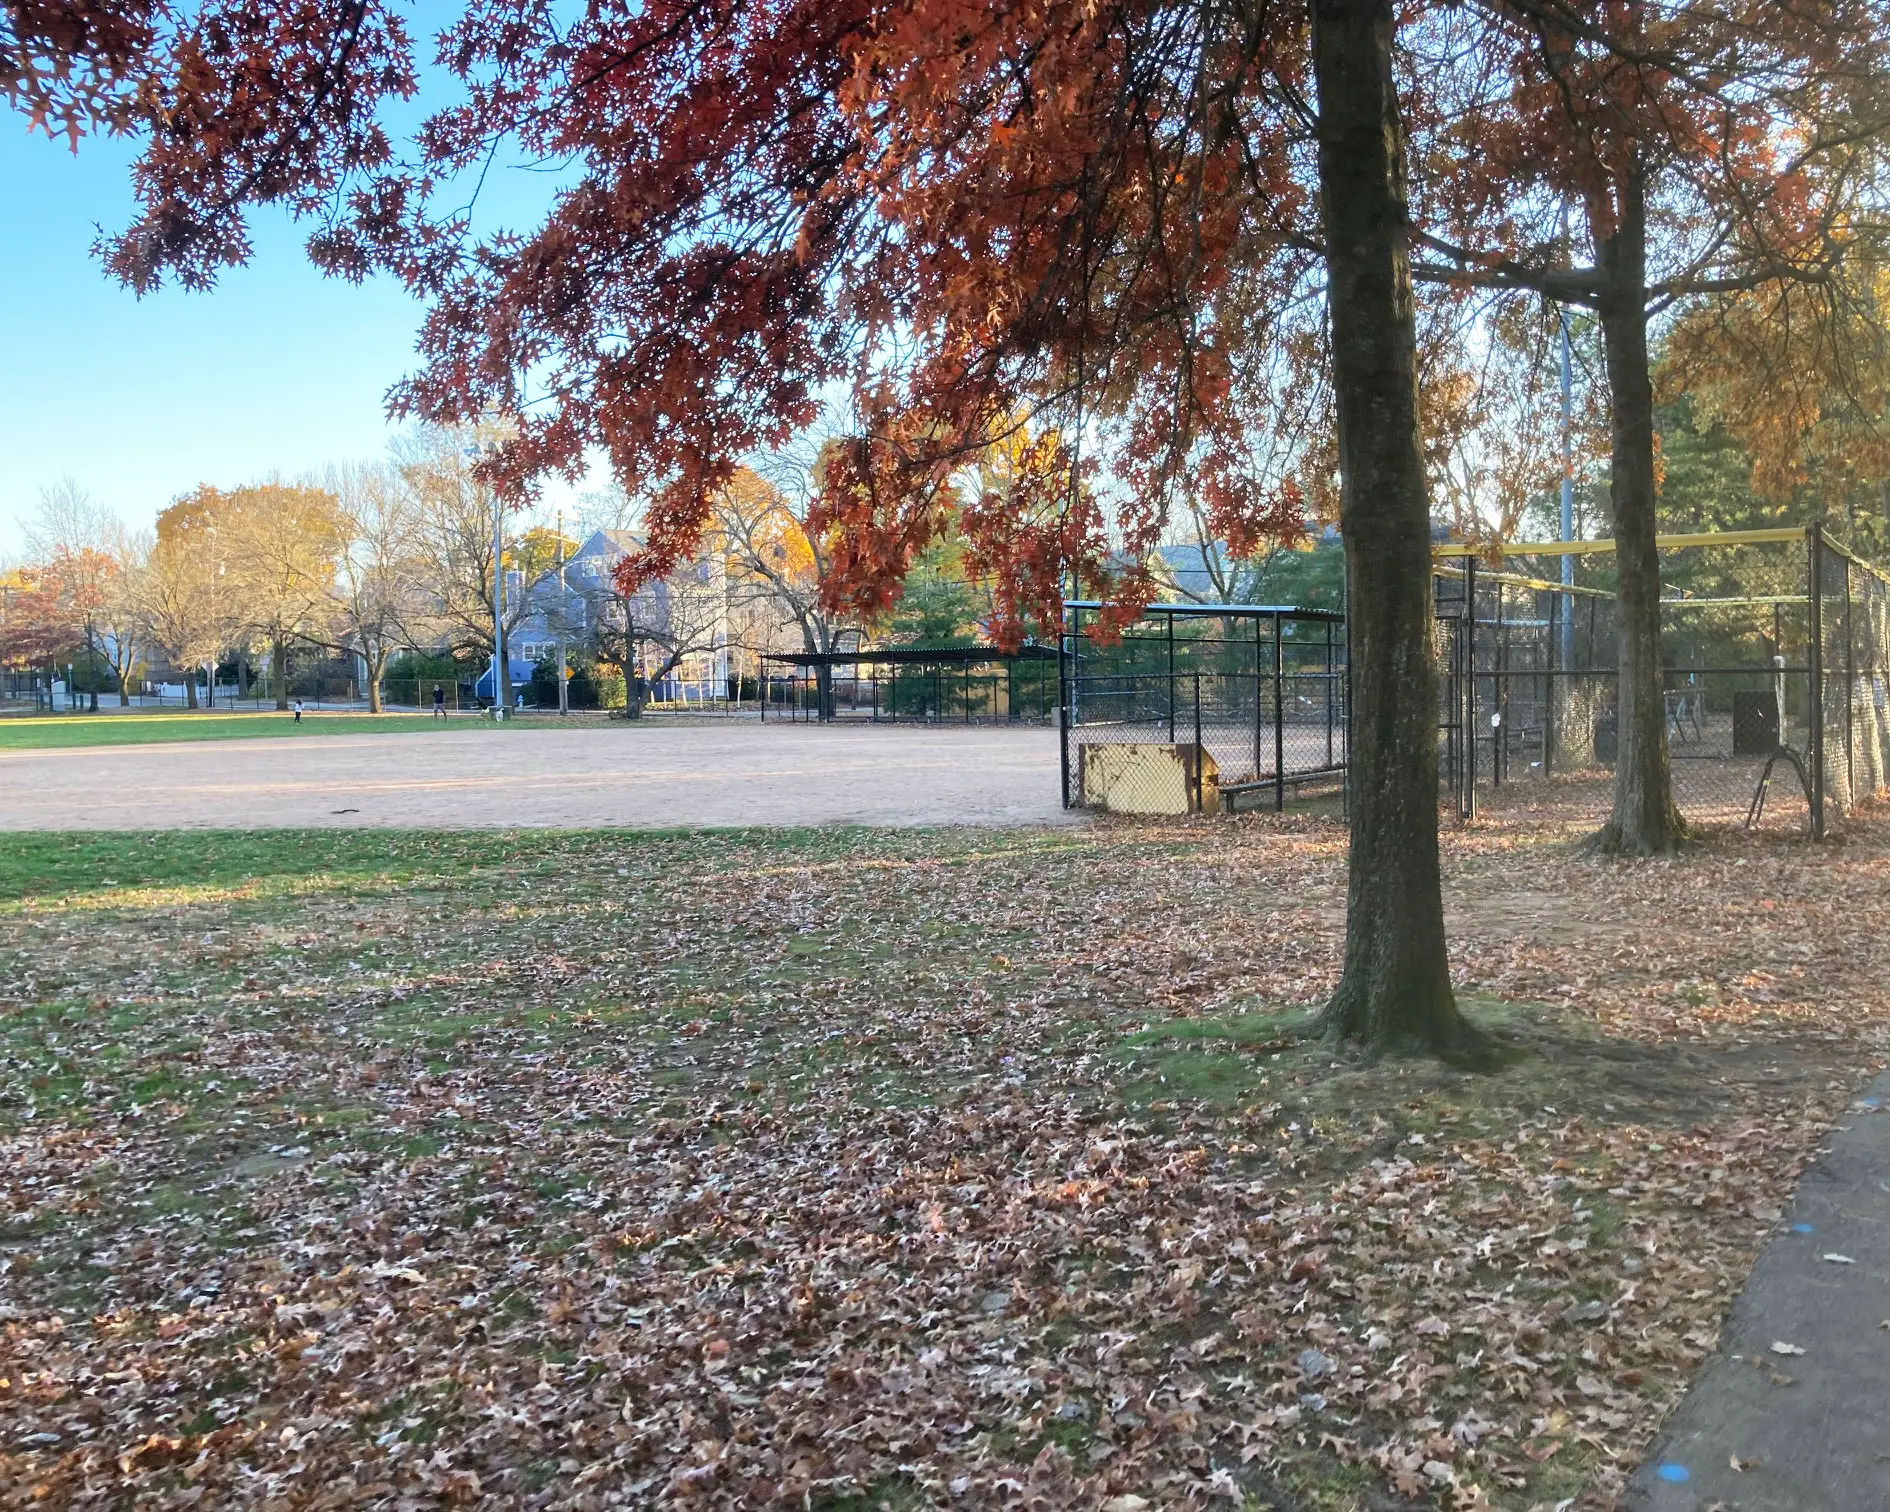 danehy park softball cages